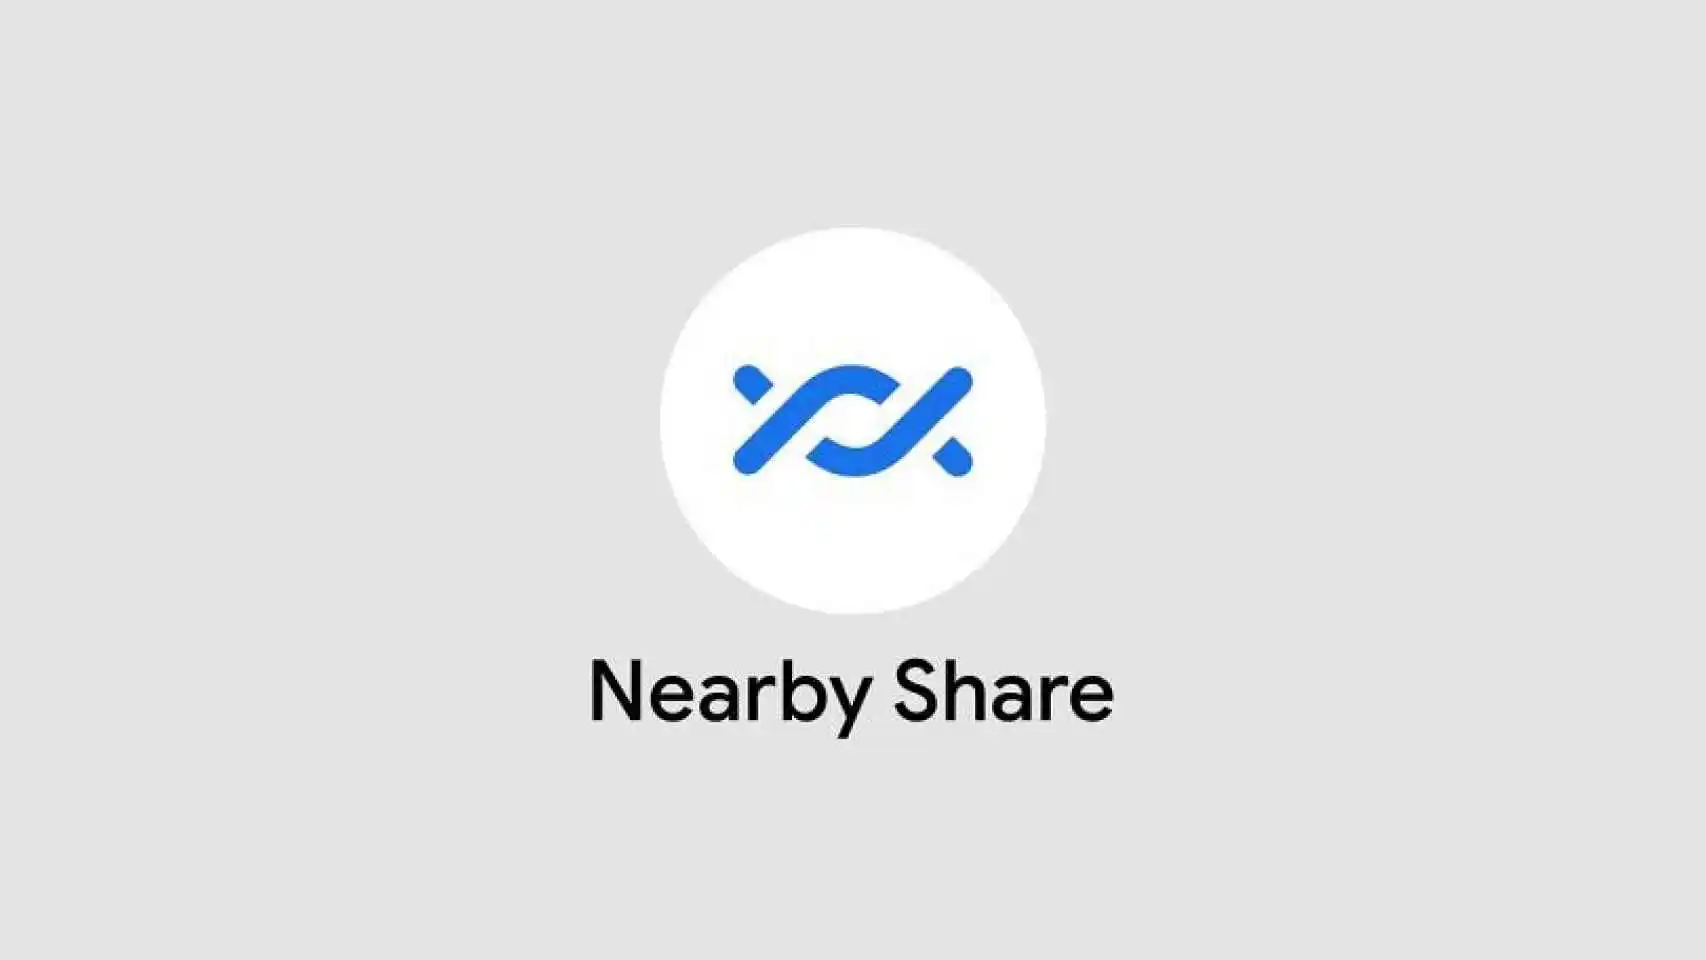 Nearby Share ya se encuentra disponible en Windows